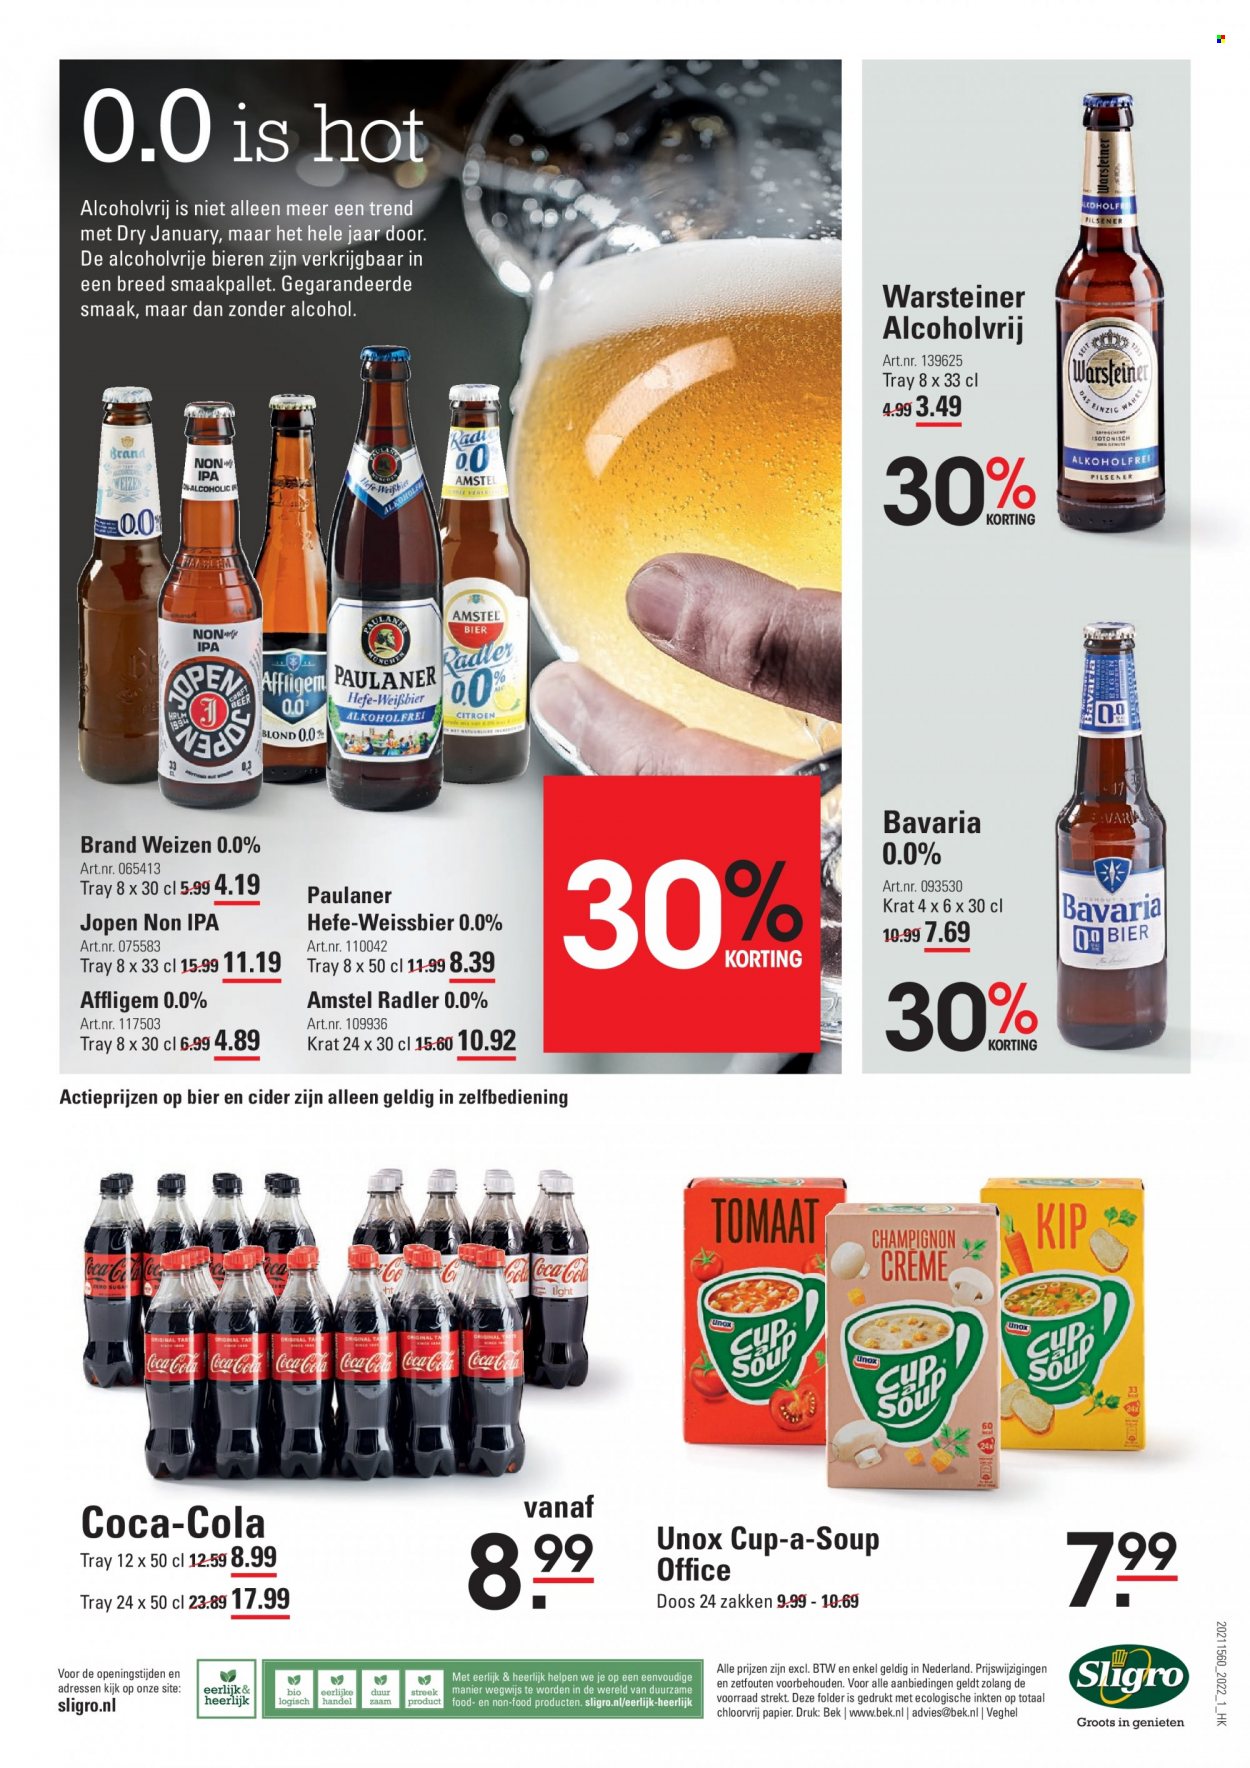 thumbnail - Sligro-aanbieding - 6-1-2022 - 24-1-2022 -  producten in de aanbieding - Affligem, Warsteiner, Amstel Bier, Bavaria, bier, cup-a-soup, Coca-Cola, cider. Pagina 16.